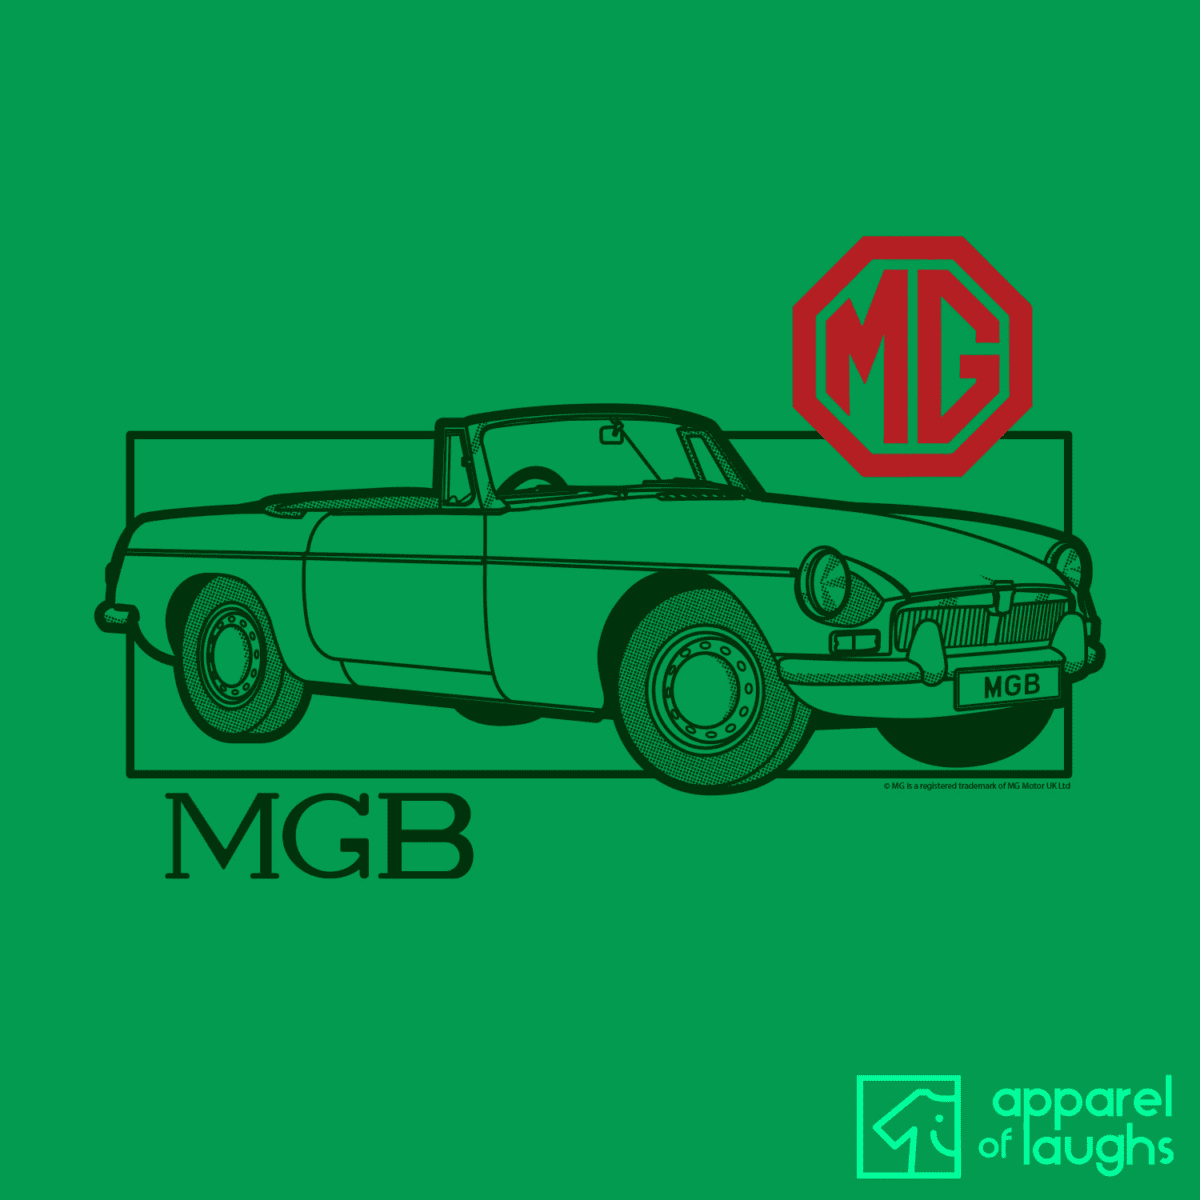 MG MGB Car Brand Vintage Retro British Leyland Motoring Automotive T-Shirt Design Irish Green